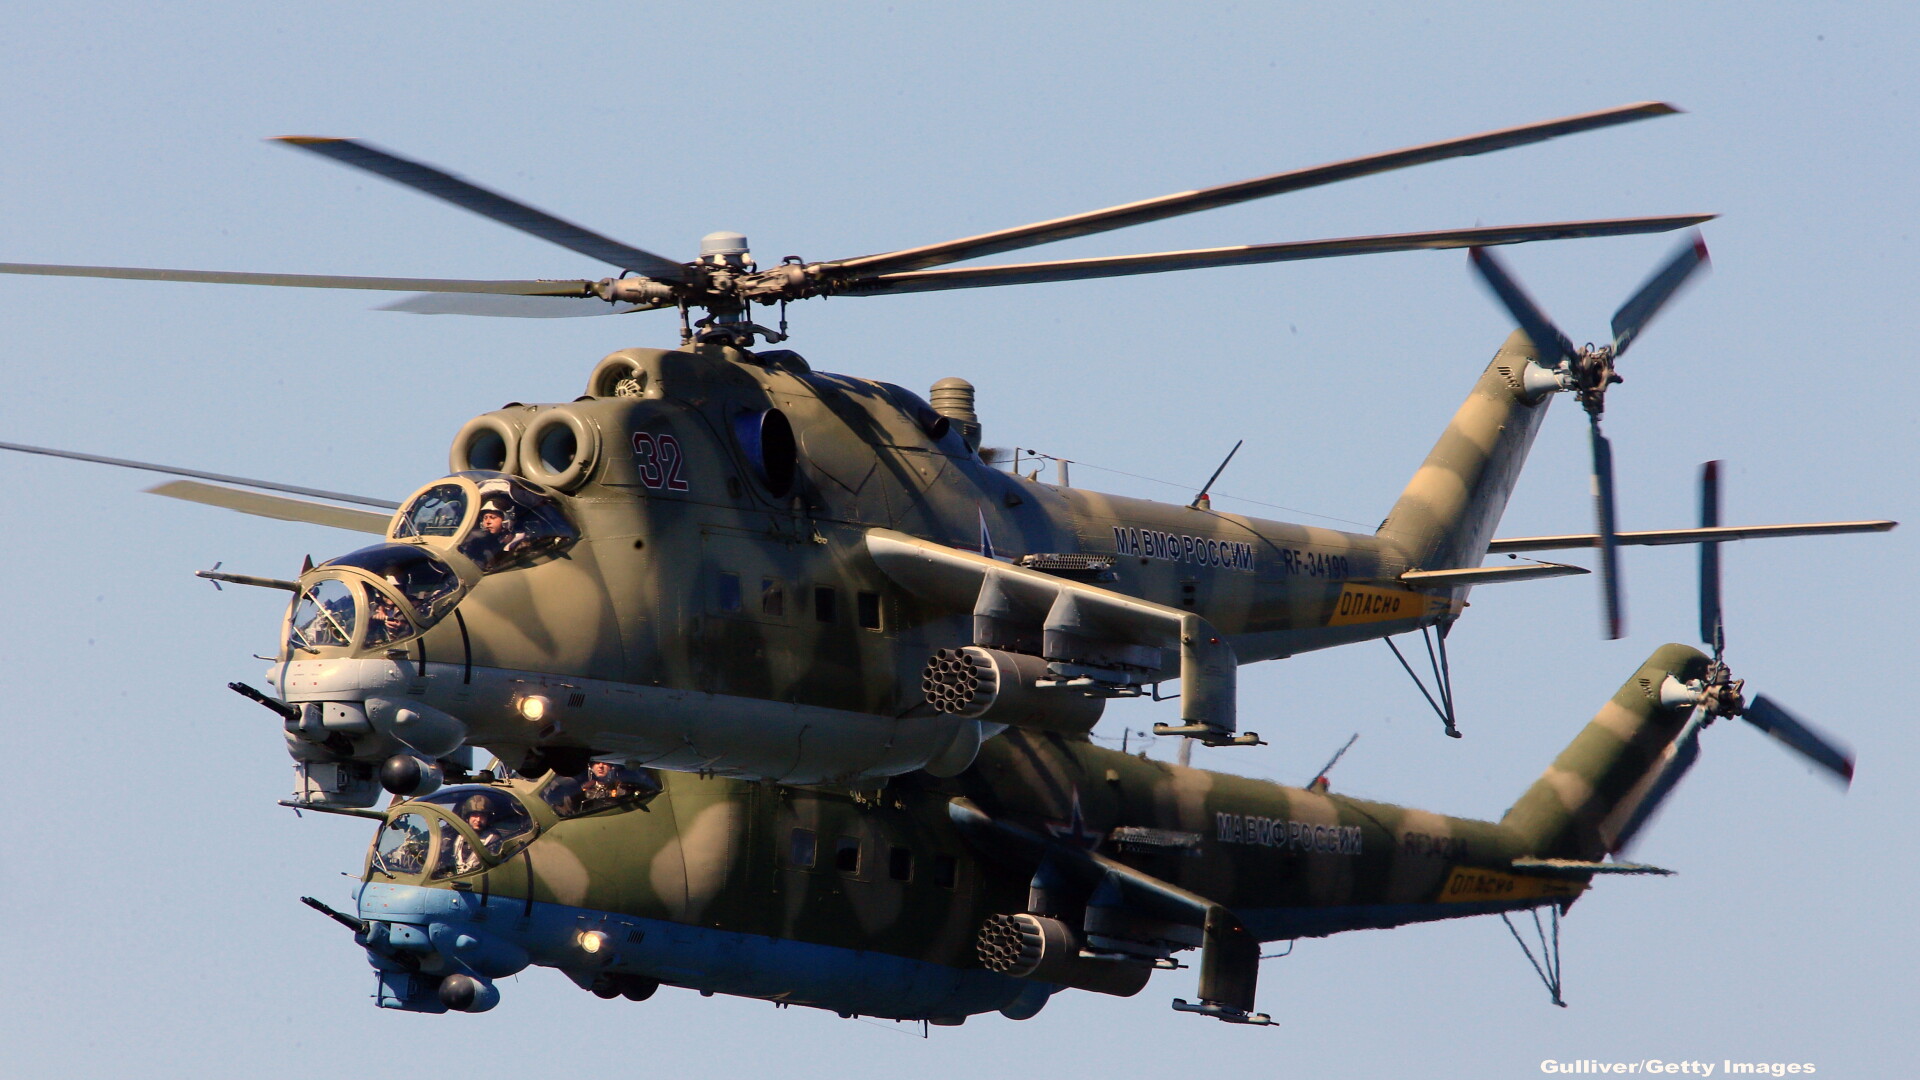 Elicopter rusesc Mi-24 - GETTY